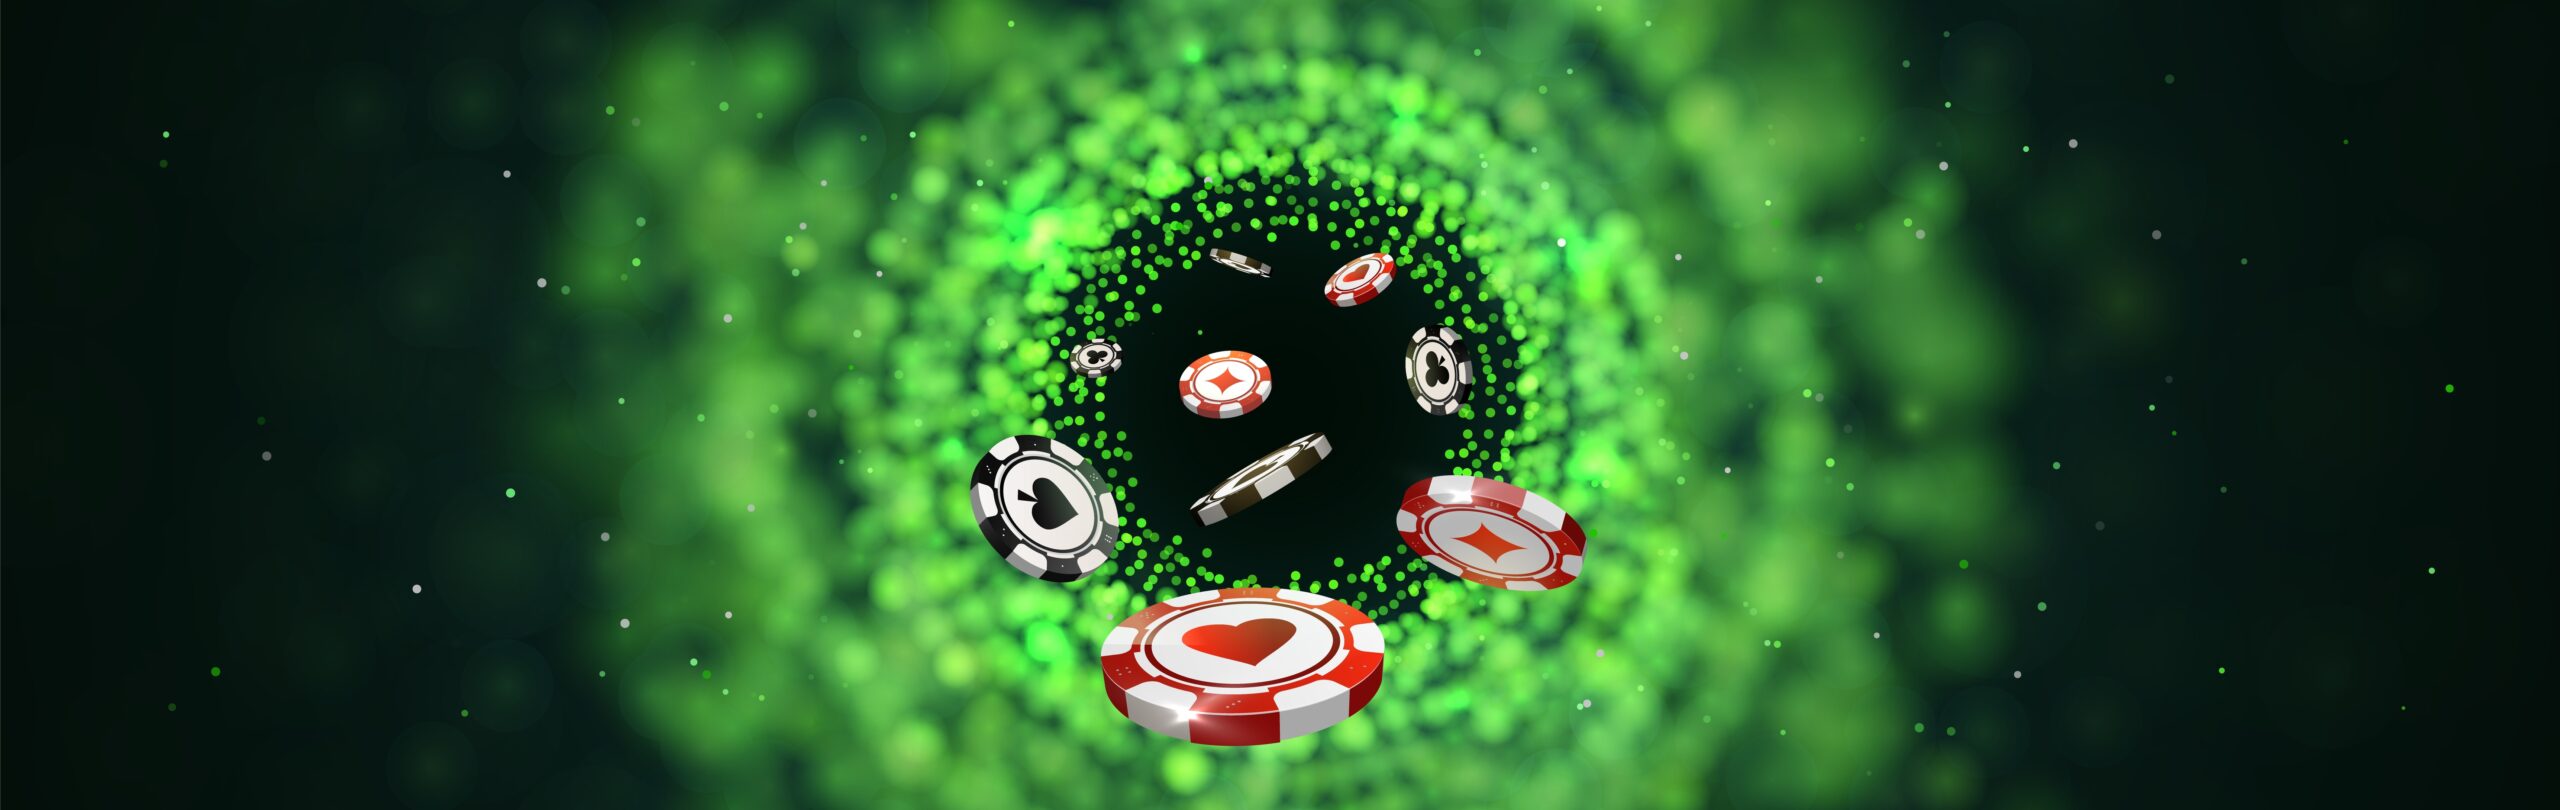 Vector red and black poker chips on green blurred lights background. Online casino social media web banner